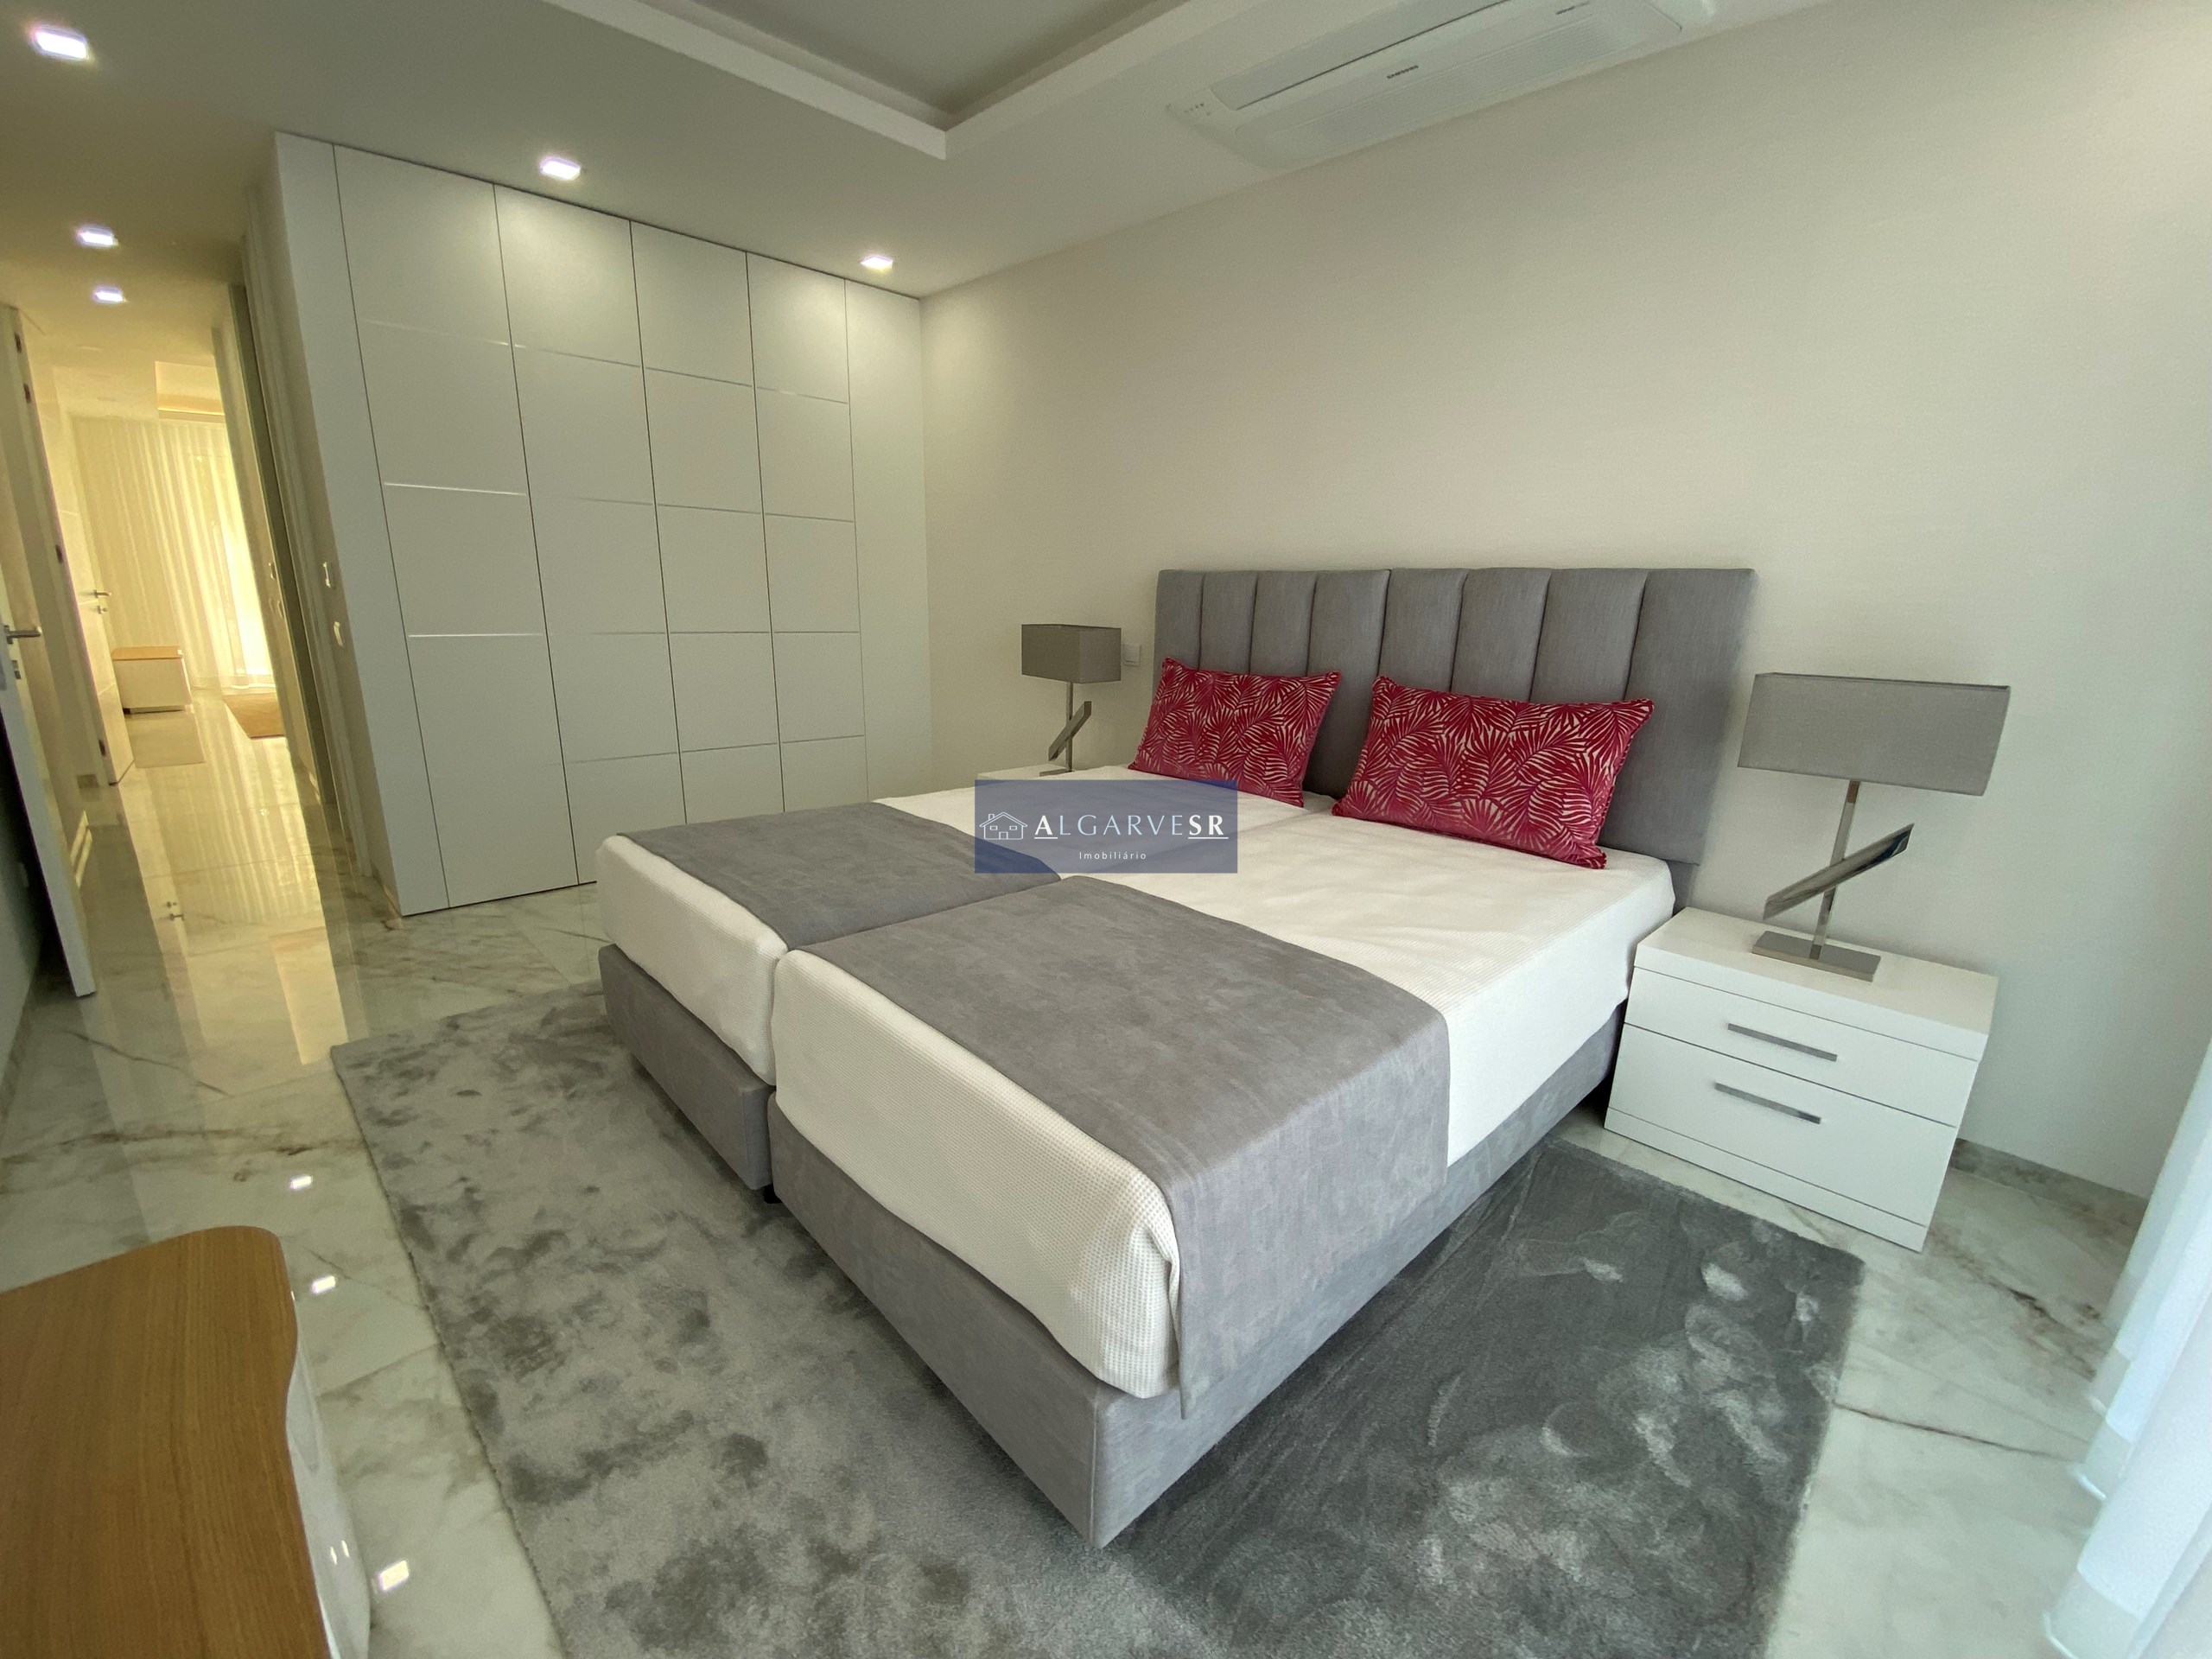 Lagos - Apartamento T3 Novo . Condominio de Luxo c/ Piscina